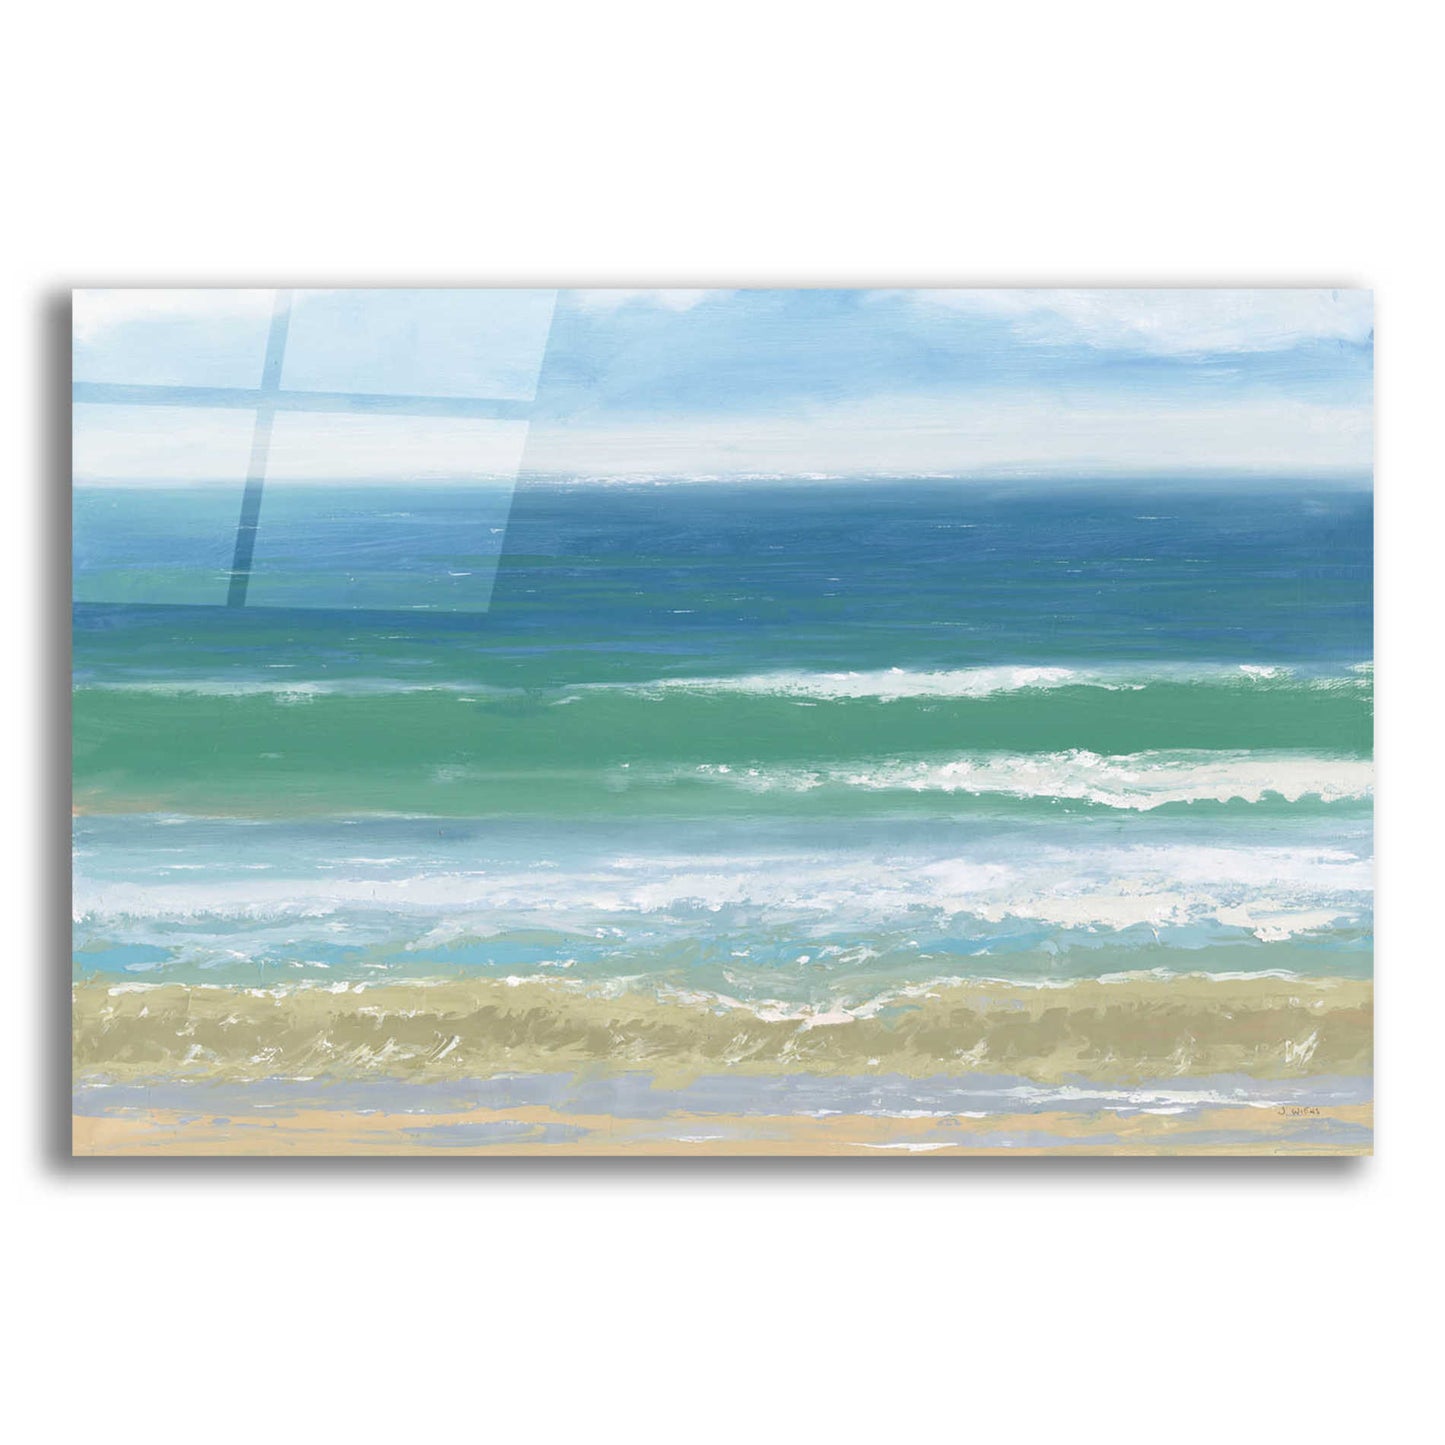 Epic Art 'Shoreline' by James Wiens, Acrylic Glass Wall Art,18x12x1.1x0,26x18x1.1x0,40x26x1.74x0,60x40x1.74x0